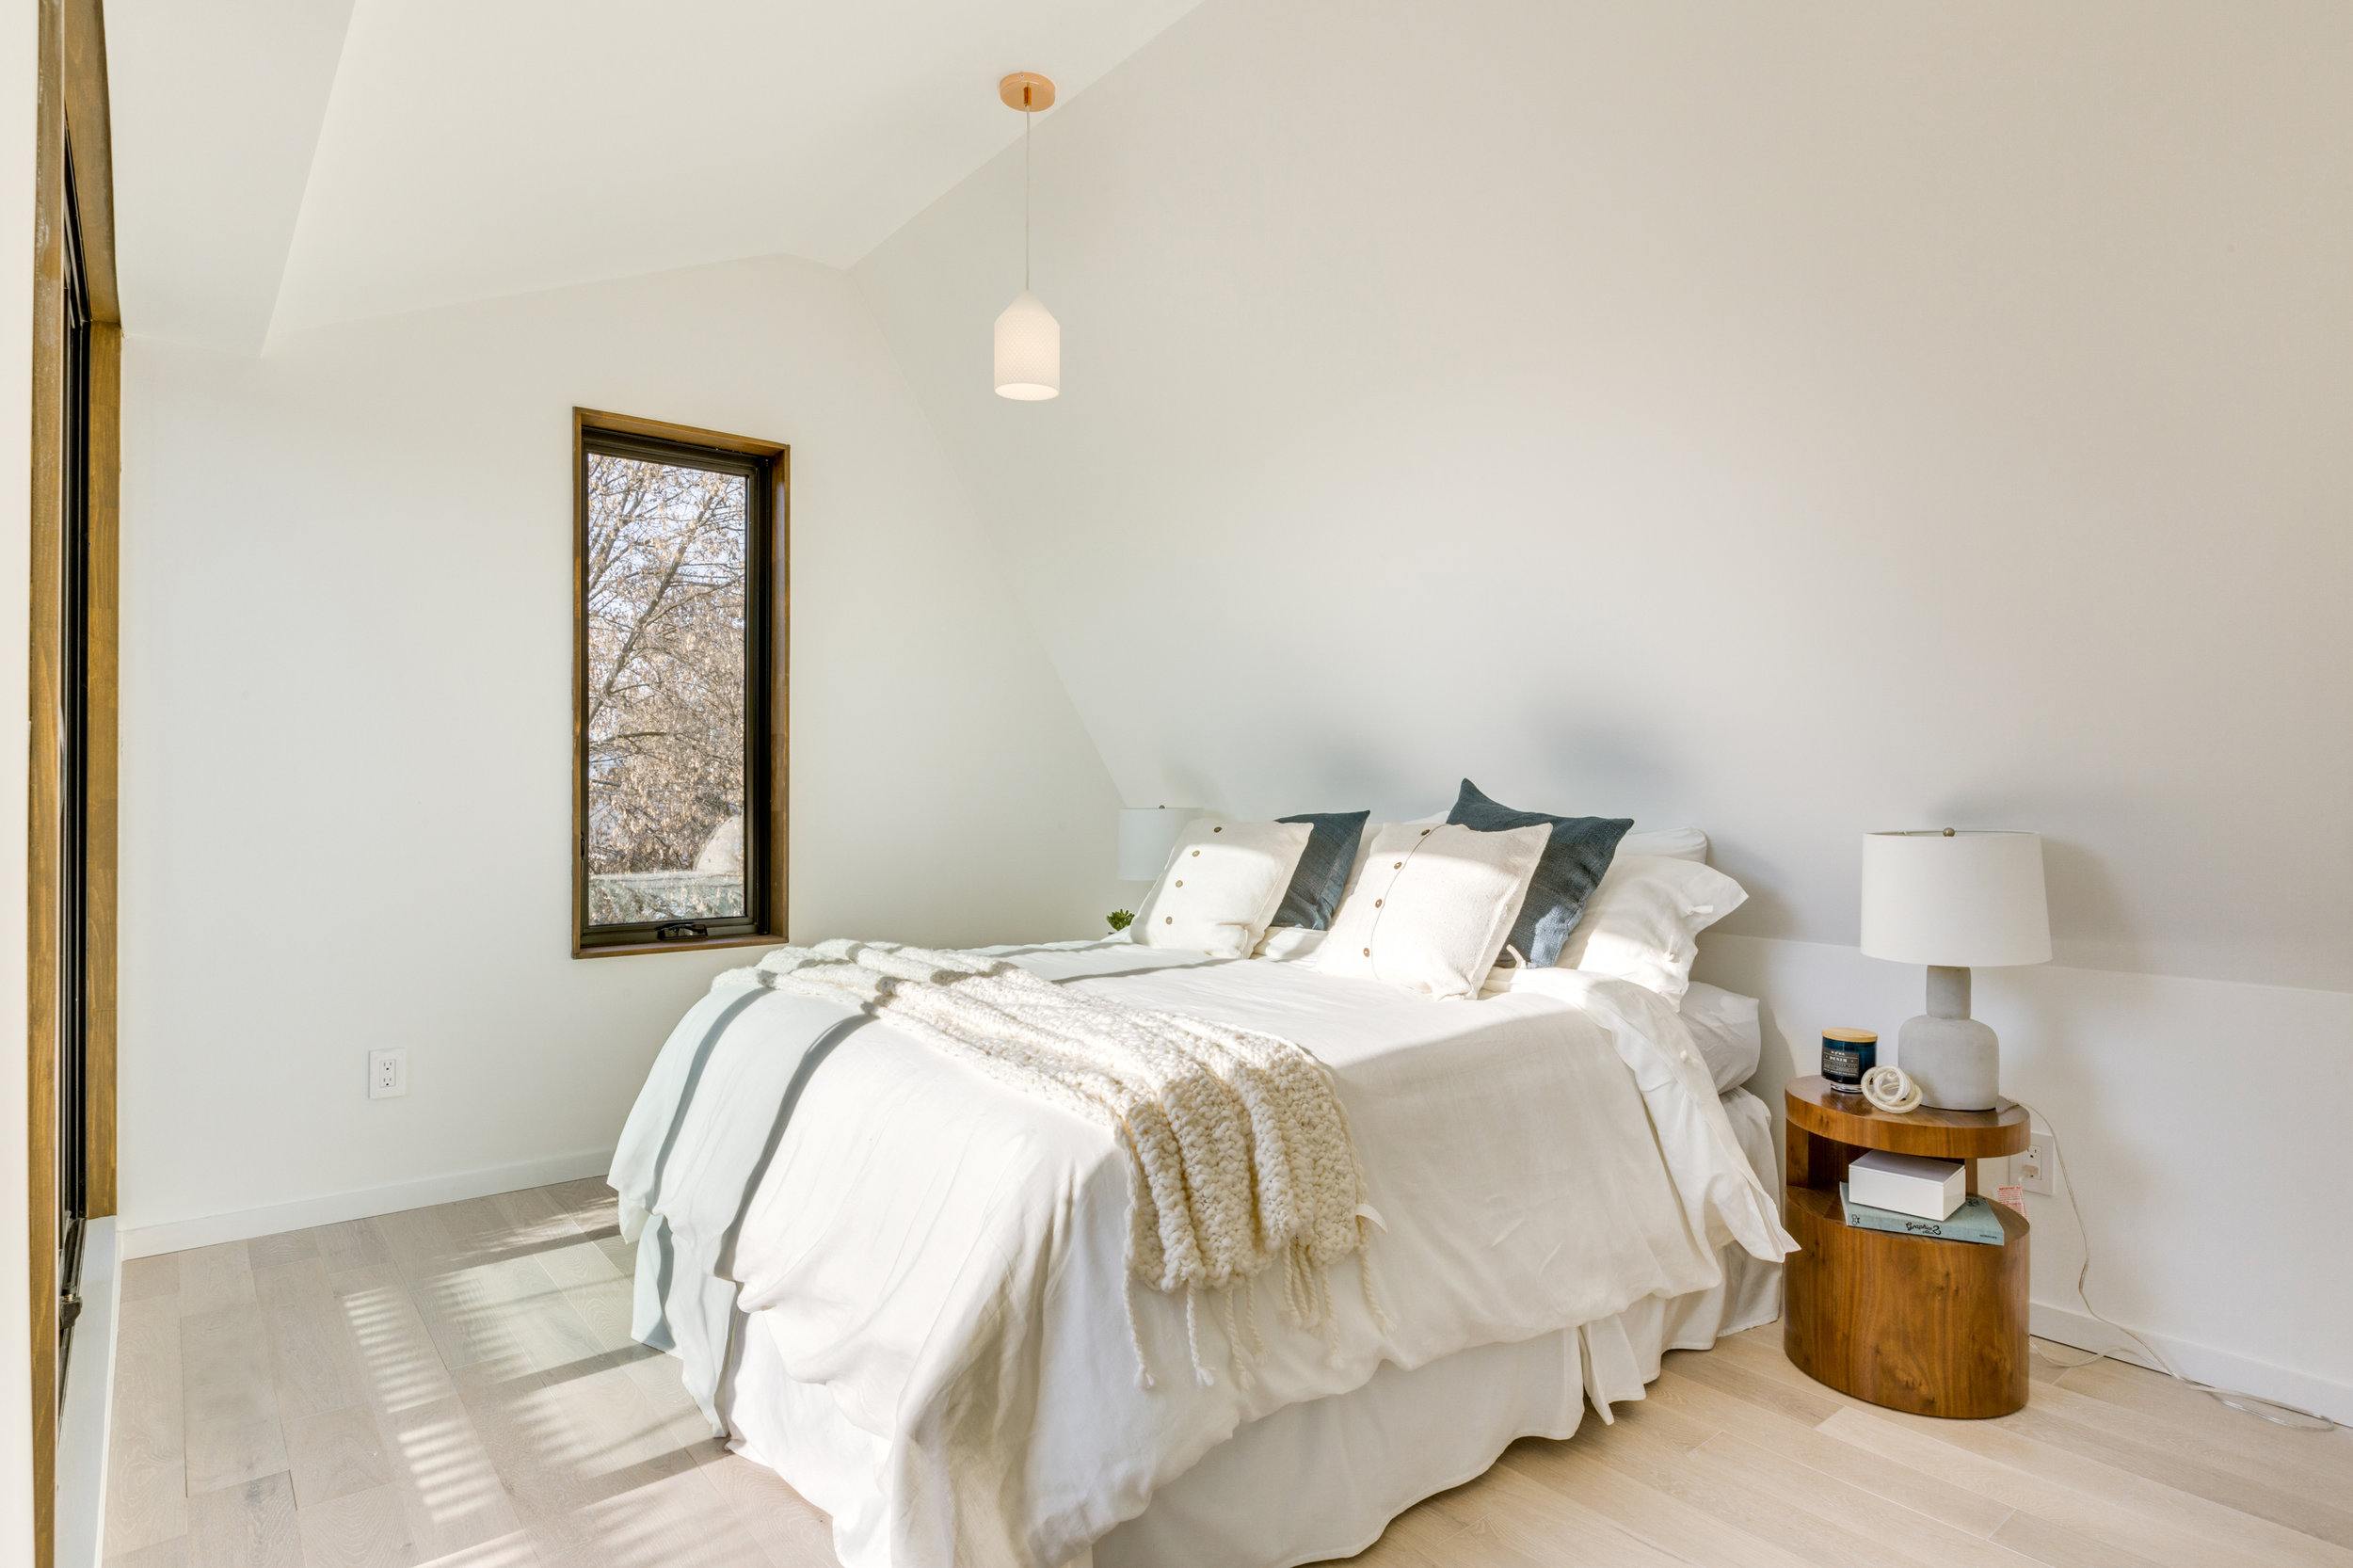 Bedroom - Toronto Home Staging